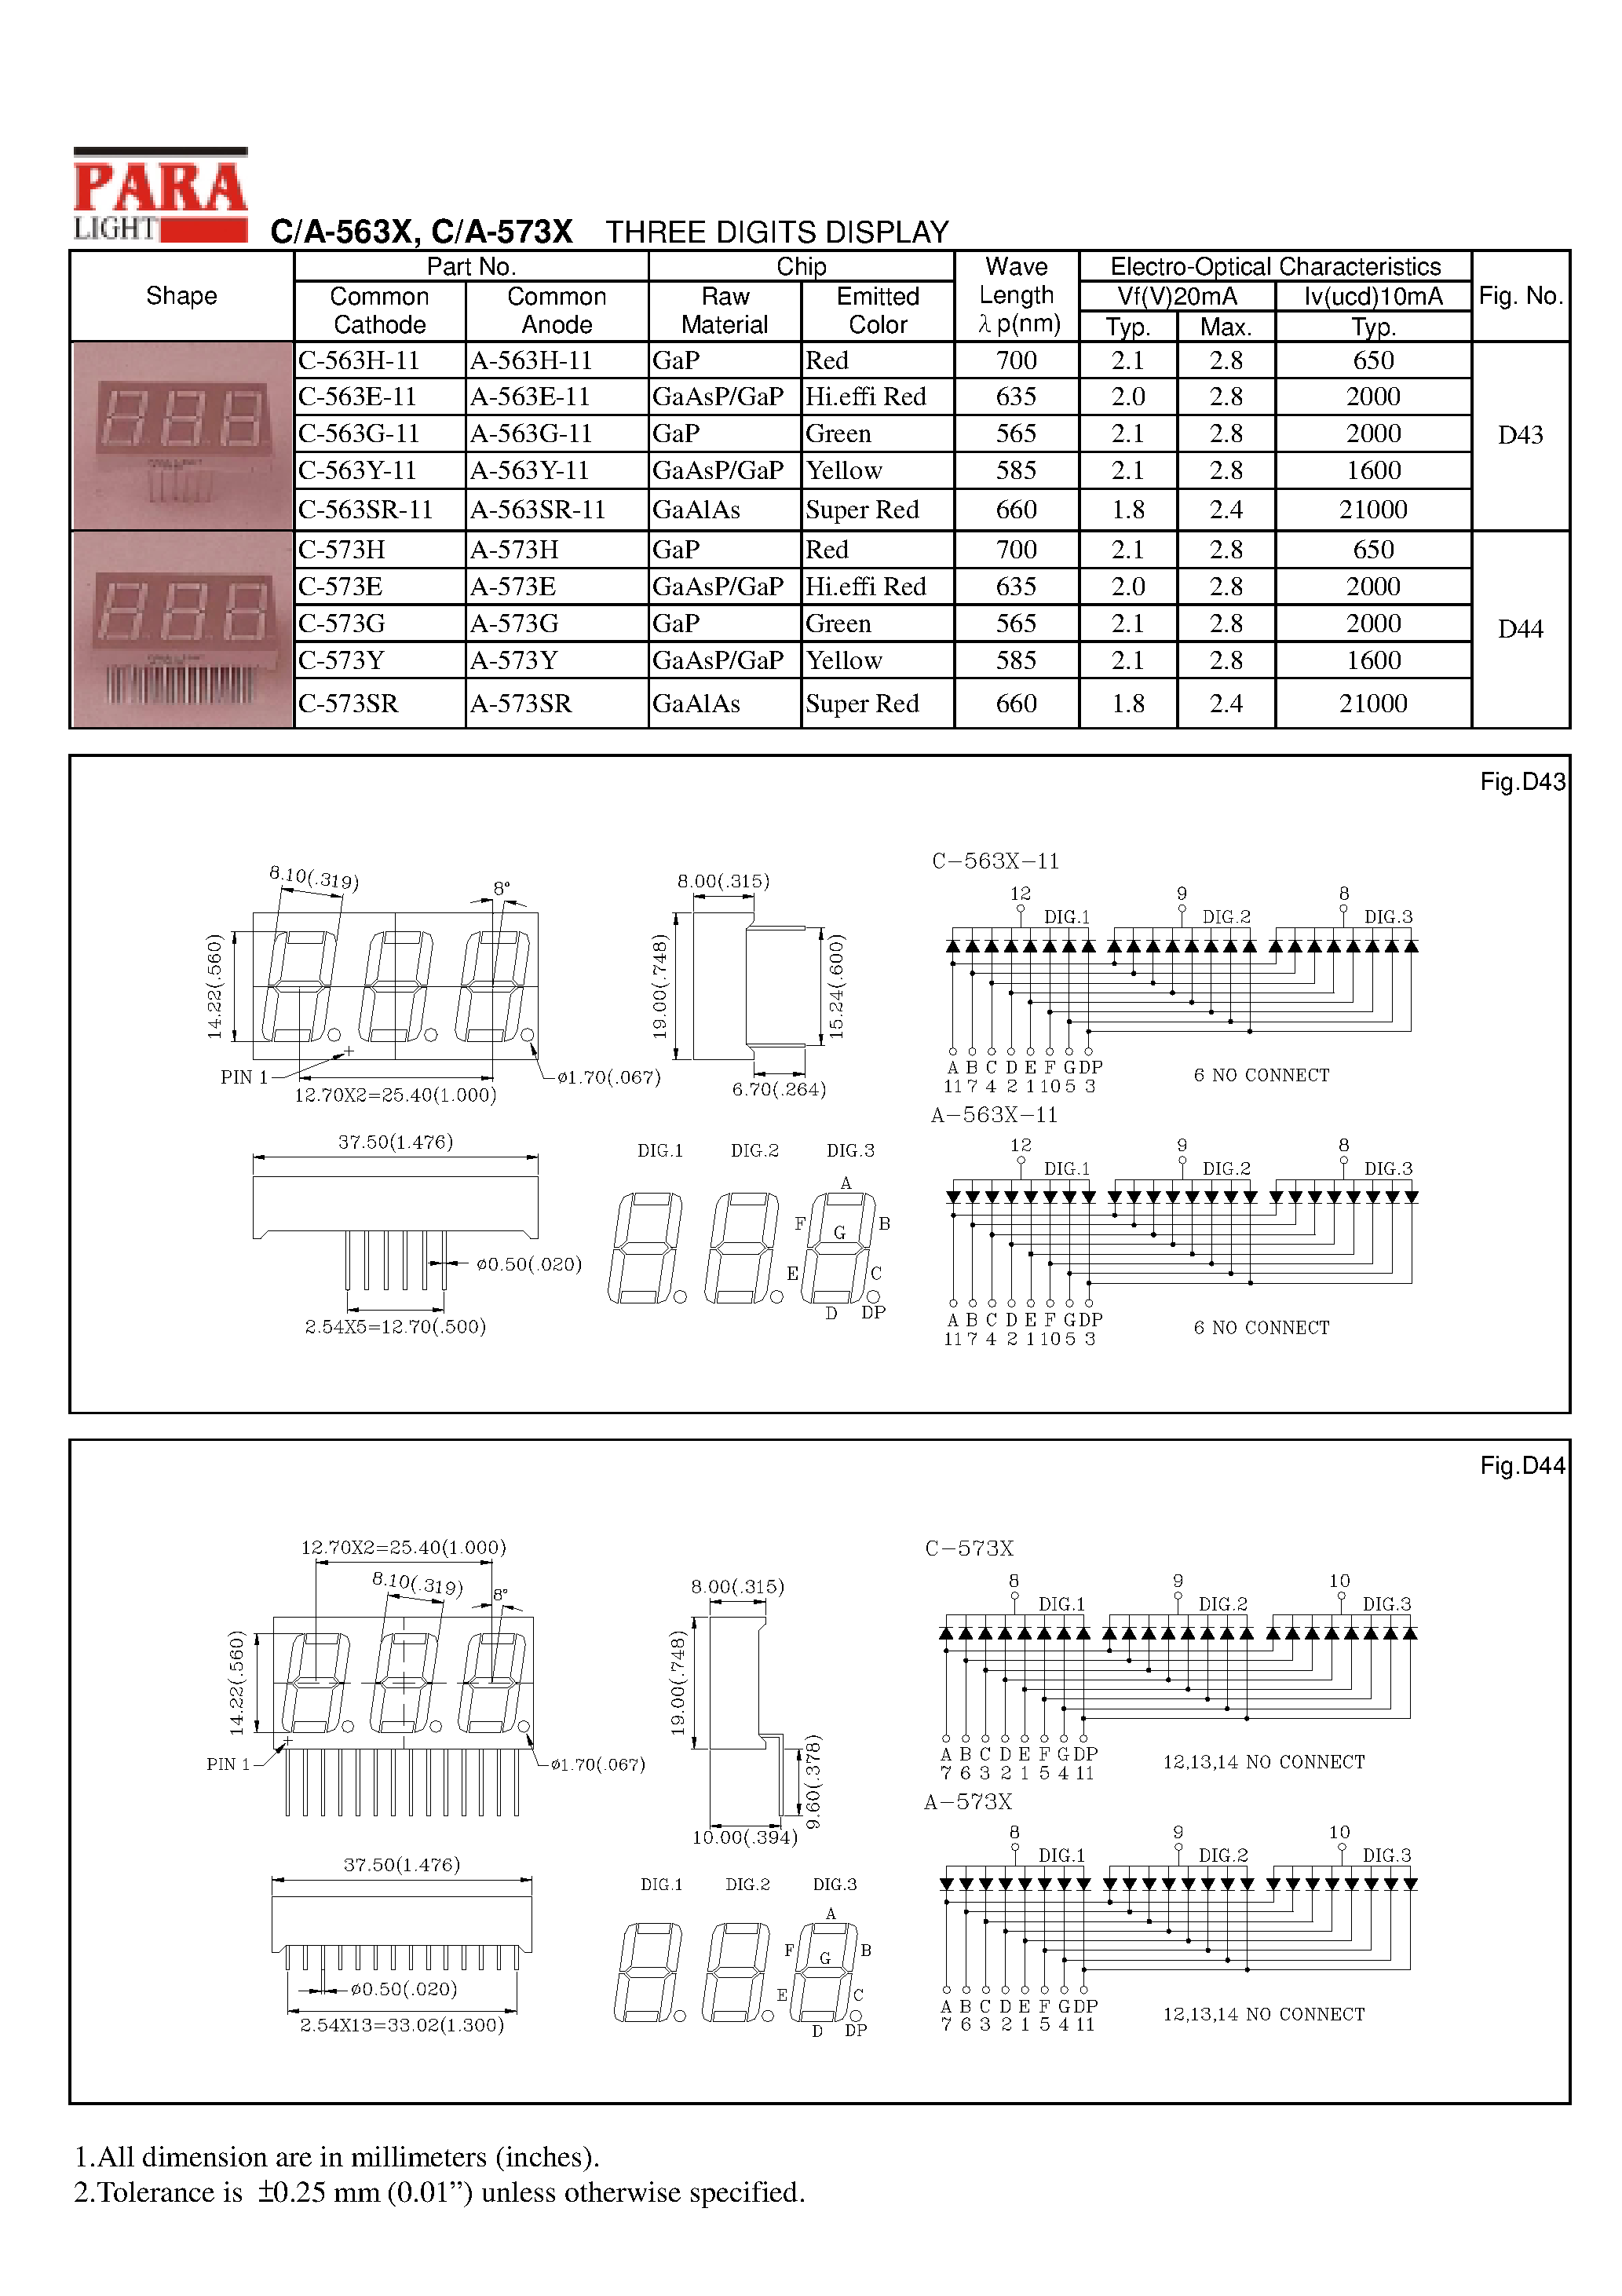 Datasheet A-563G-11 - THREE DIGITS DISPLAY page 1